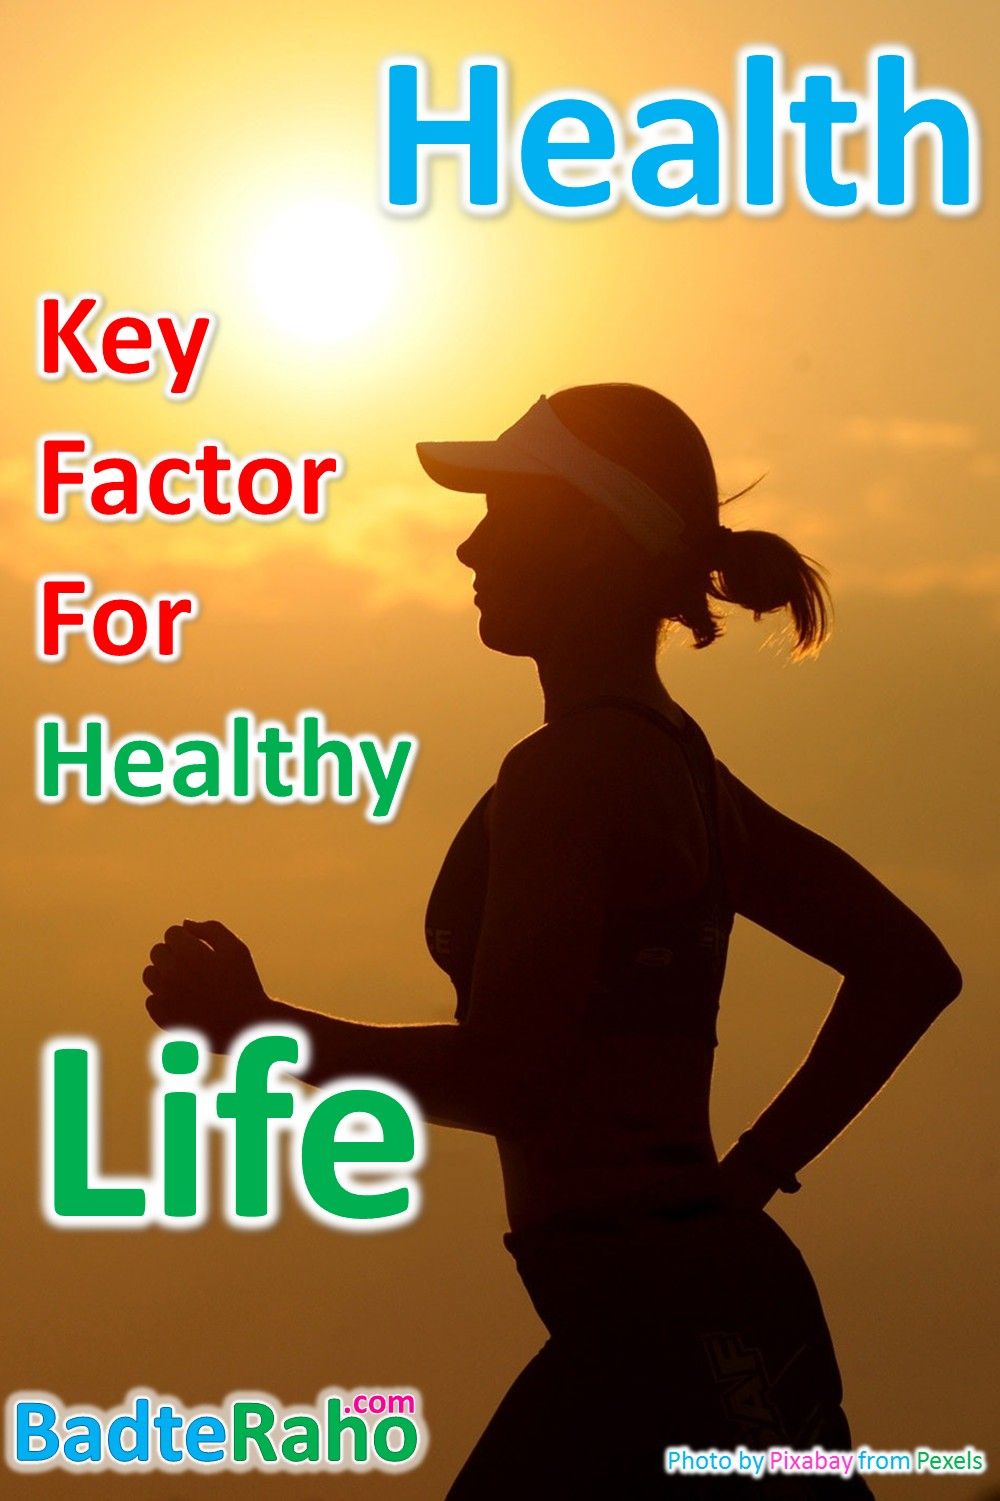 Health-Key-Factor-for-Healty-Life-Pinterest